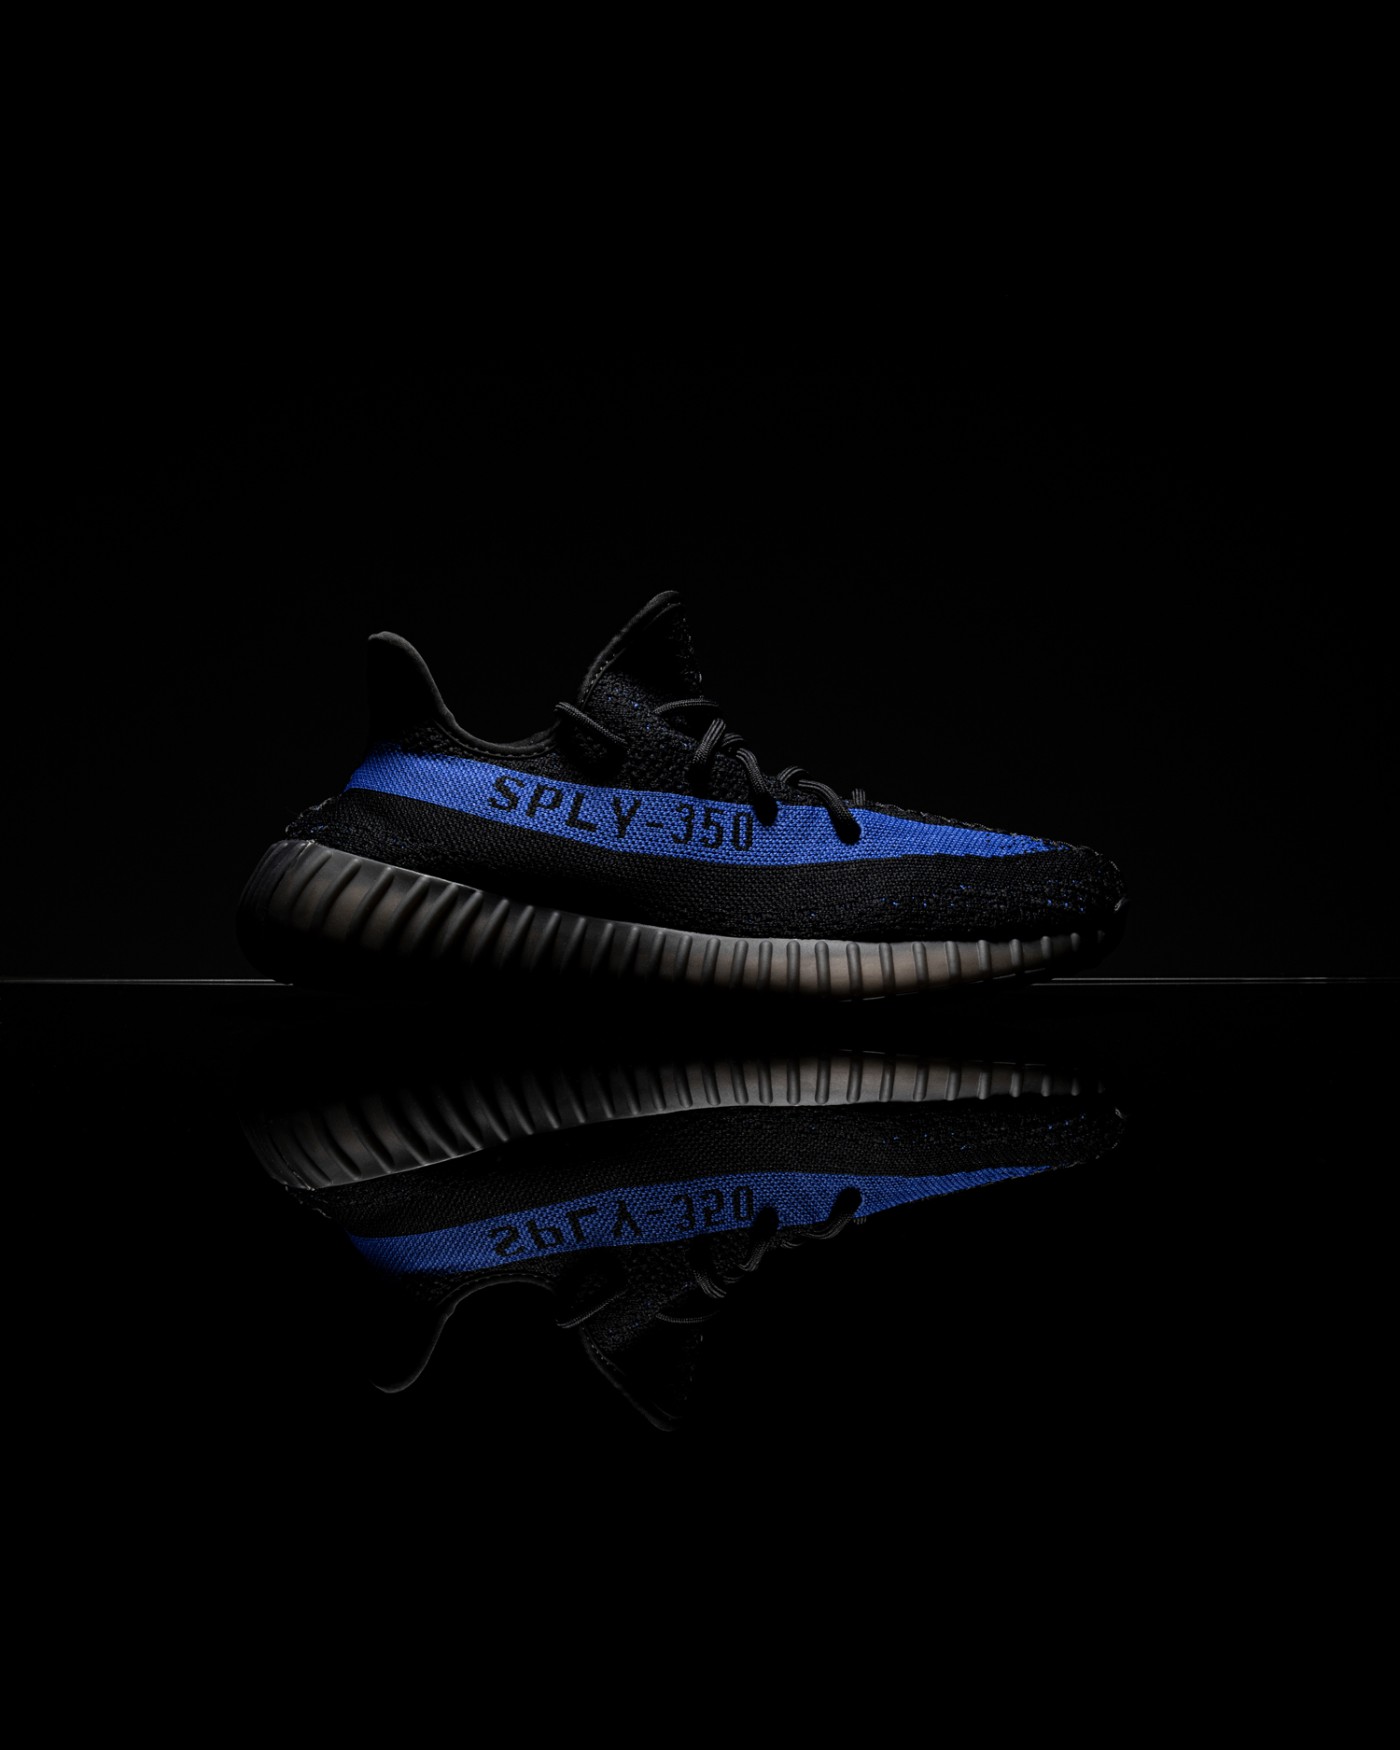 Yeezy 350 V2,adidas,发售,开箱,上脚,G  明天发售！黑蓝油漆条 Yeezy 350 V2 开箱上脚！实物质感真不错！